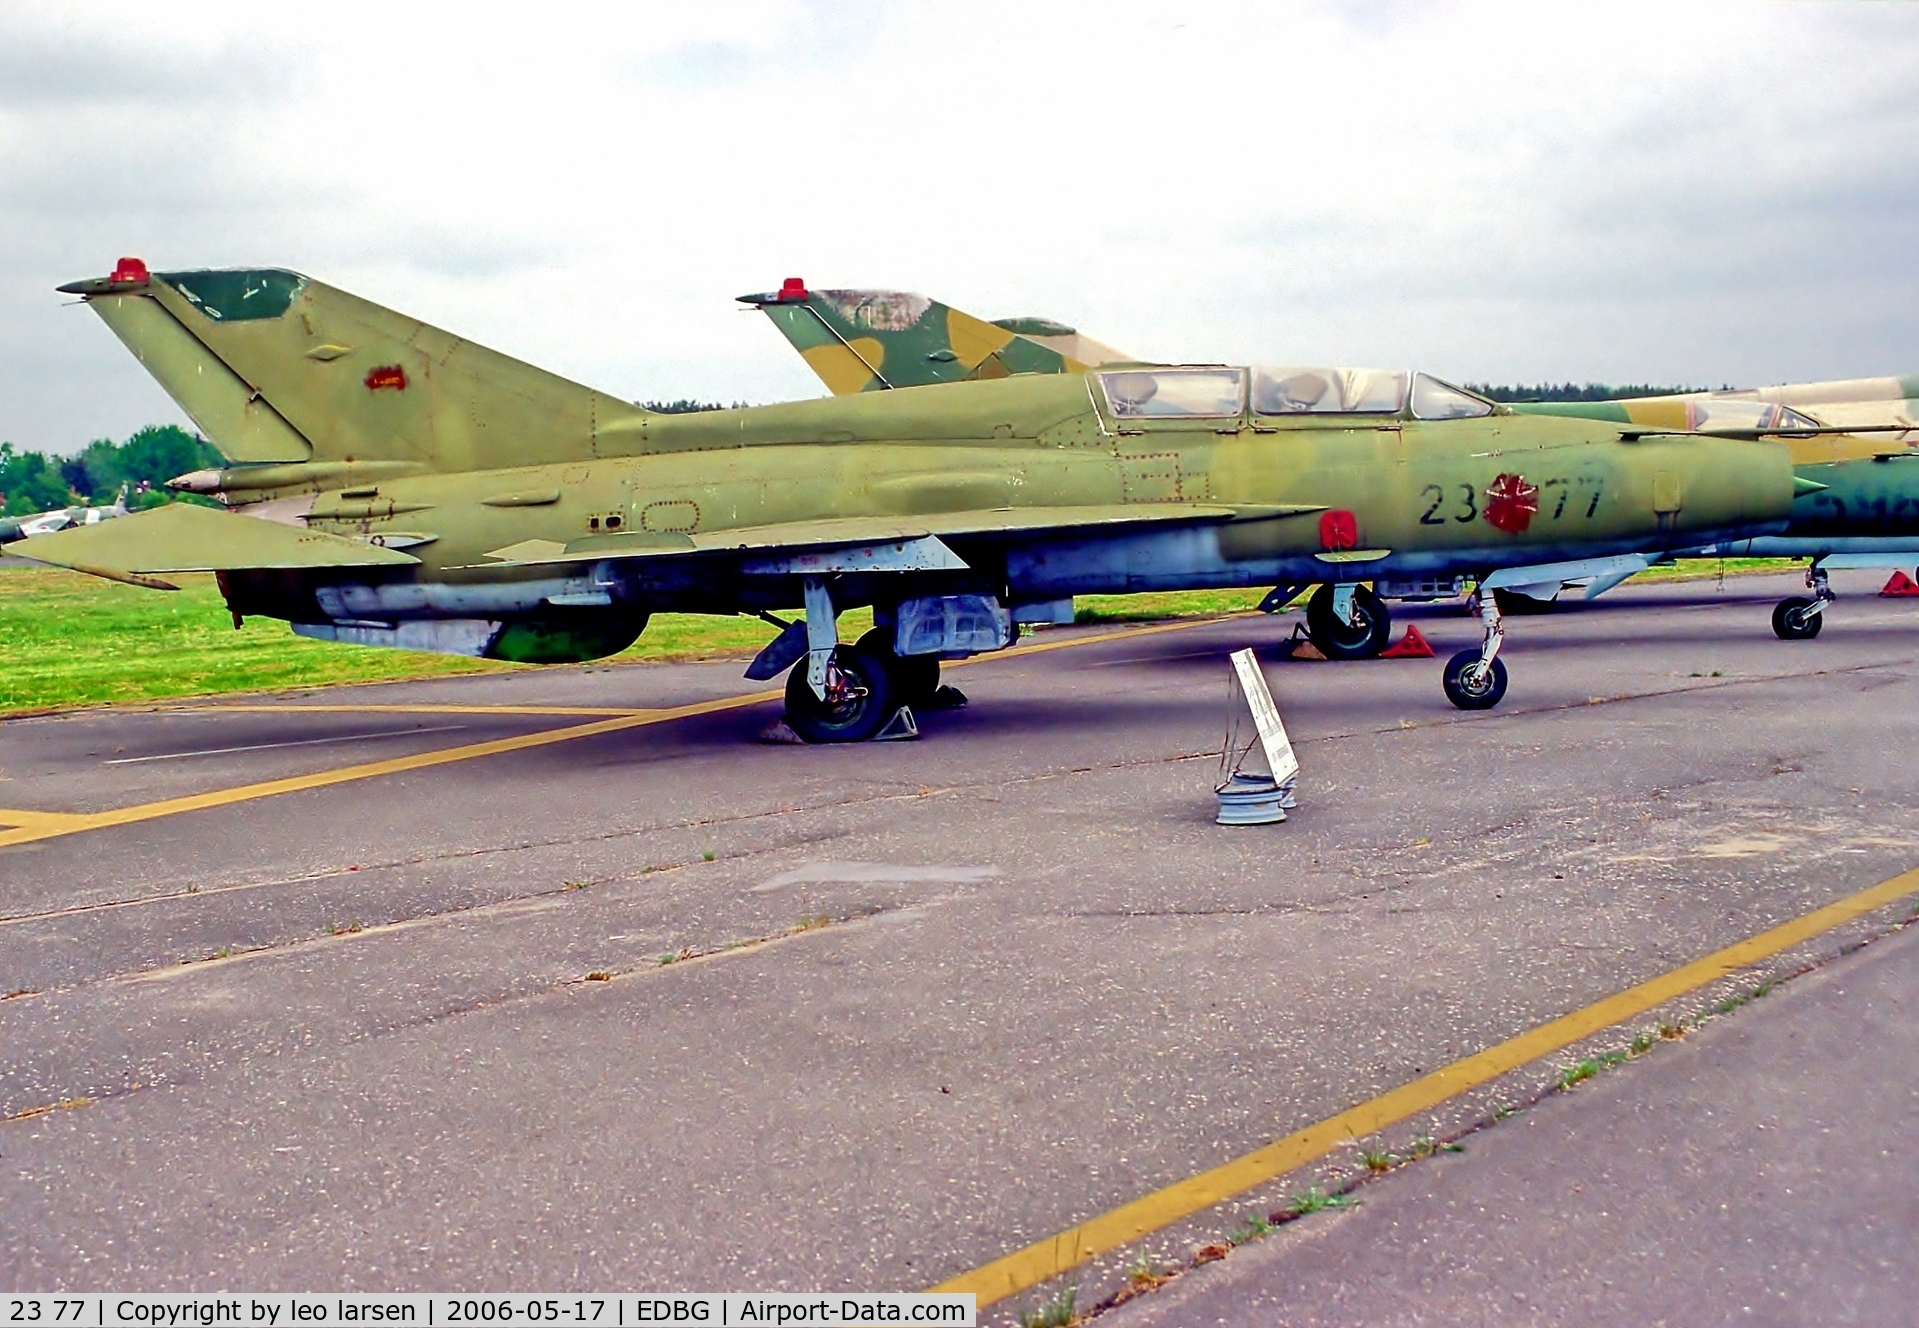 23 77, 1971 Mikoyan-Gurevich MiG-21UM C/N 02695156, Berlin Gatow 17.6.06